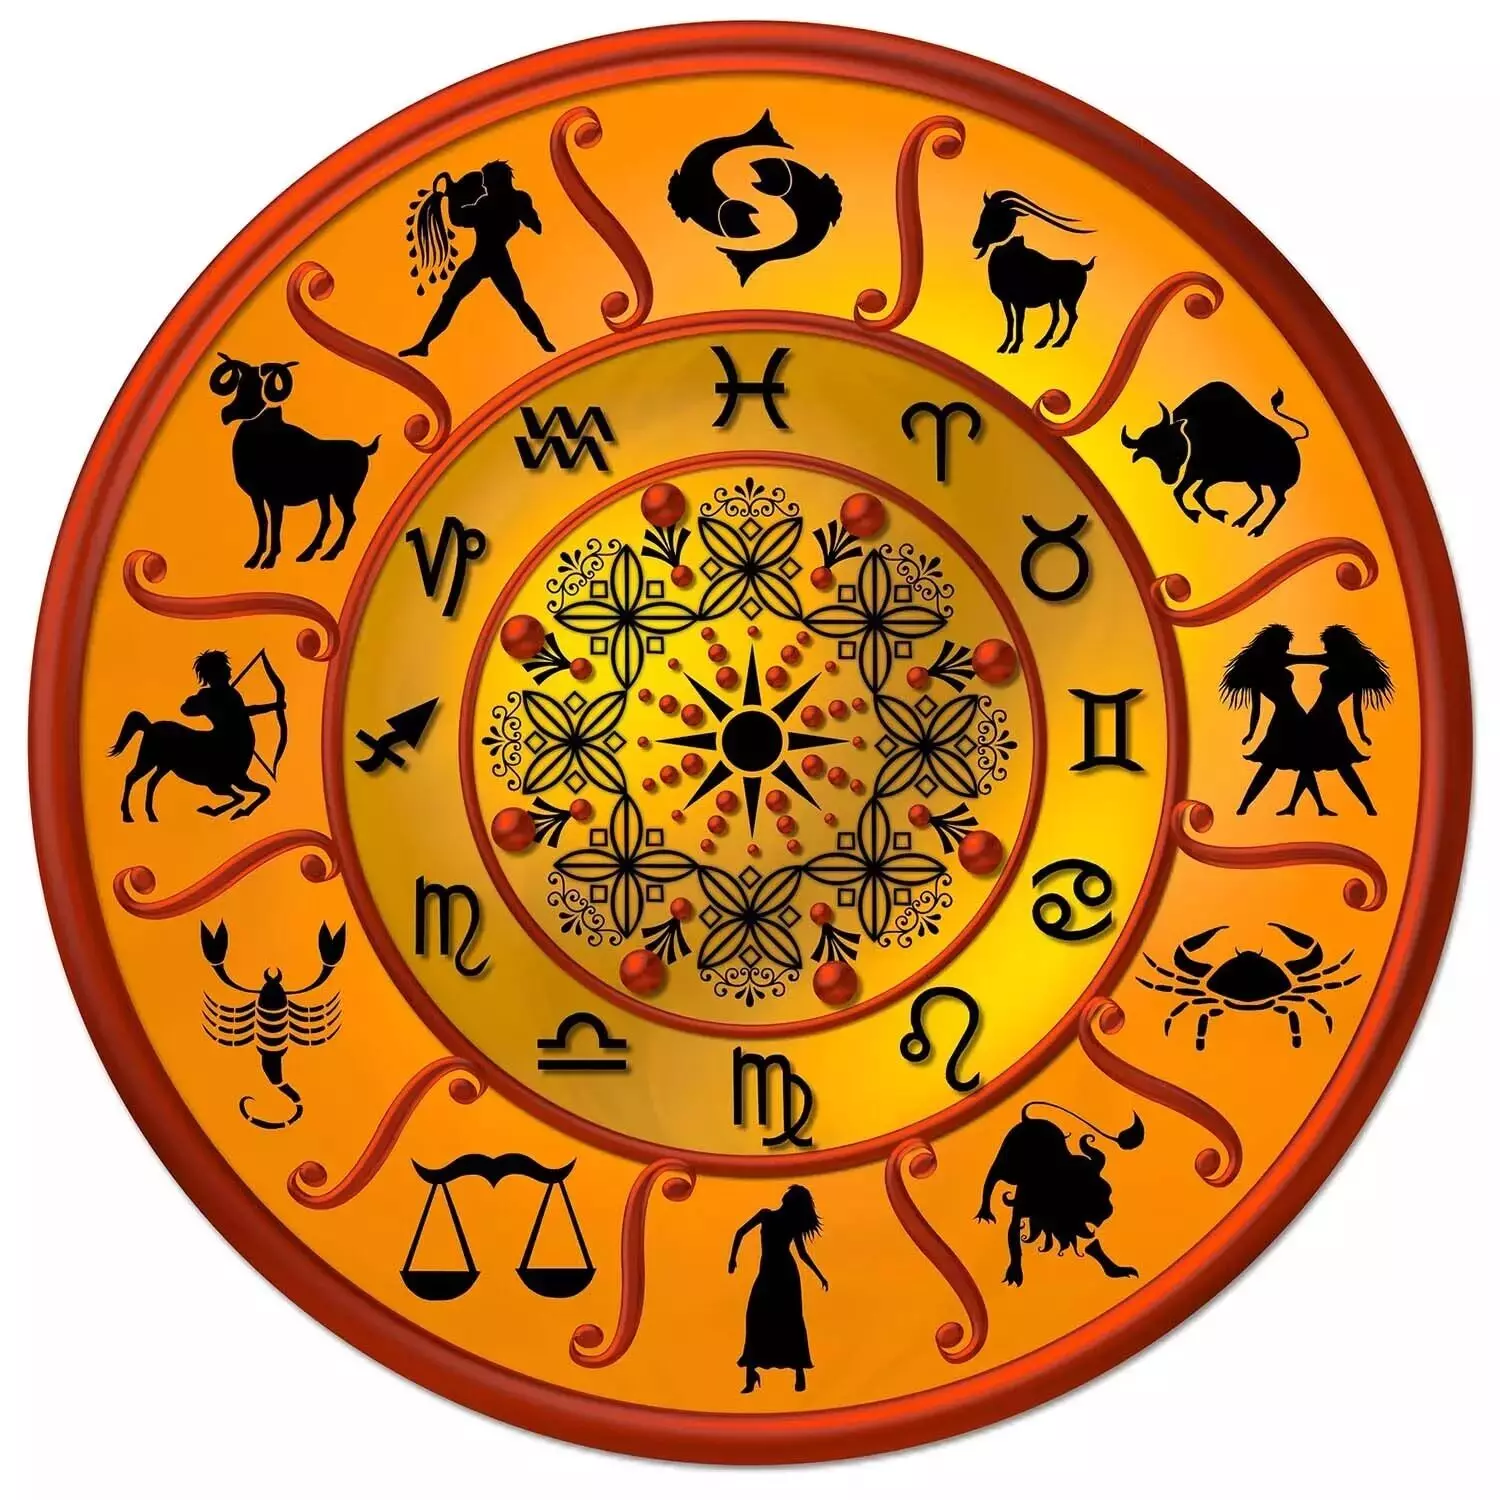 22  Novembar  – Know your todays horoscope